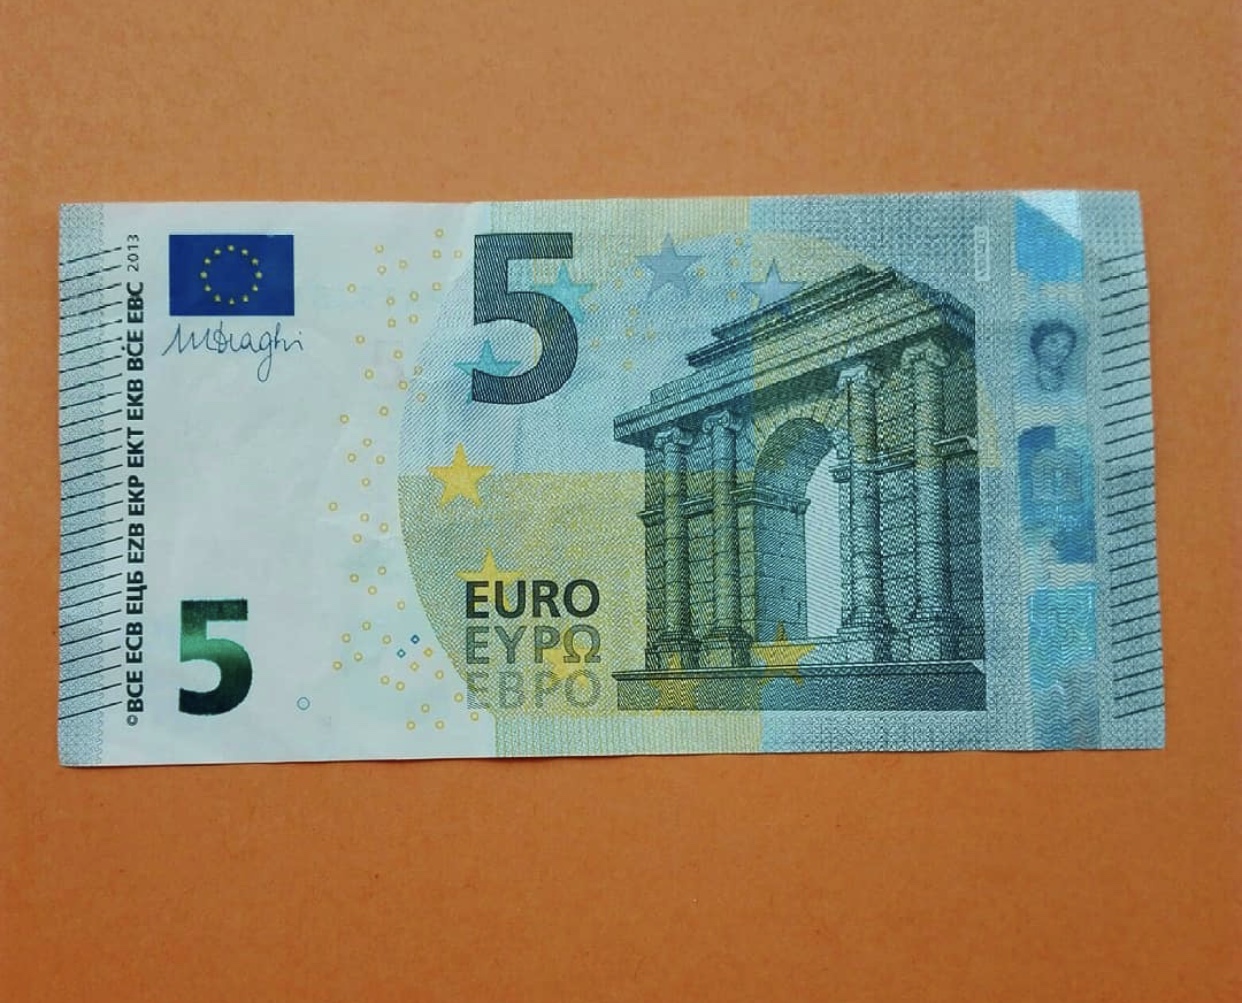 €5 Euro Bills FOR SALE ONLINE - Ready Prop Money